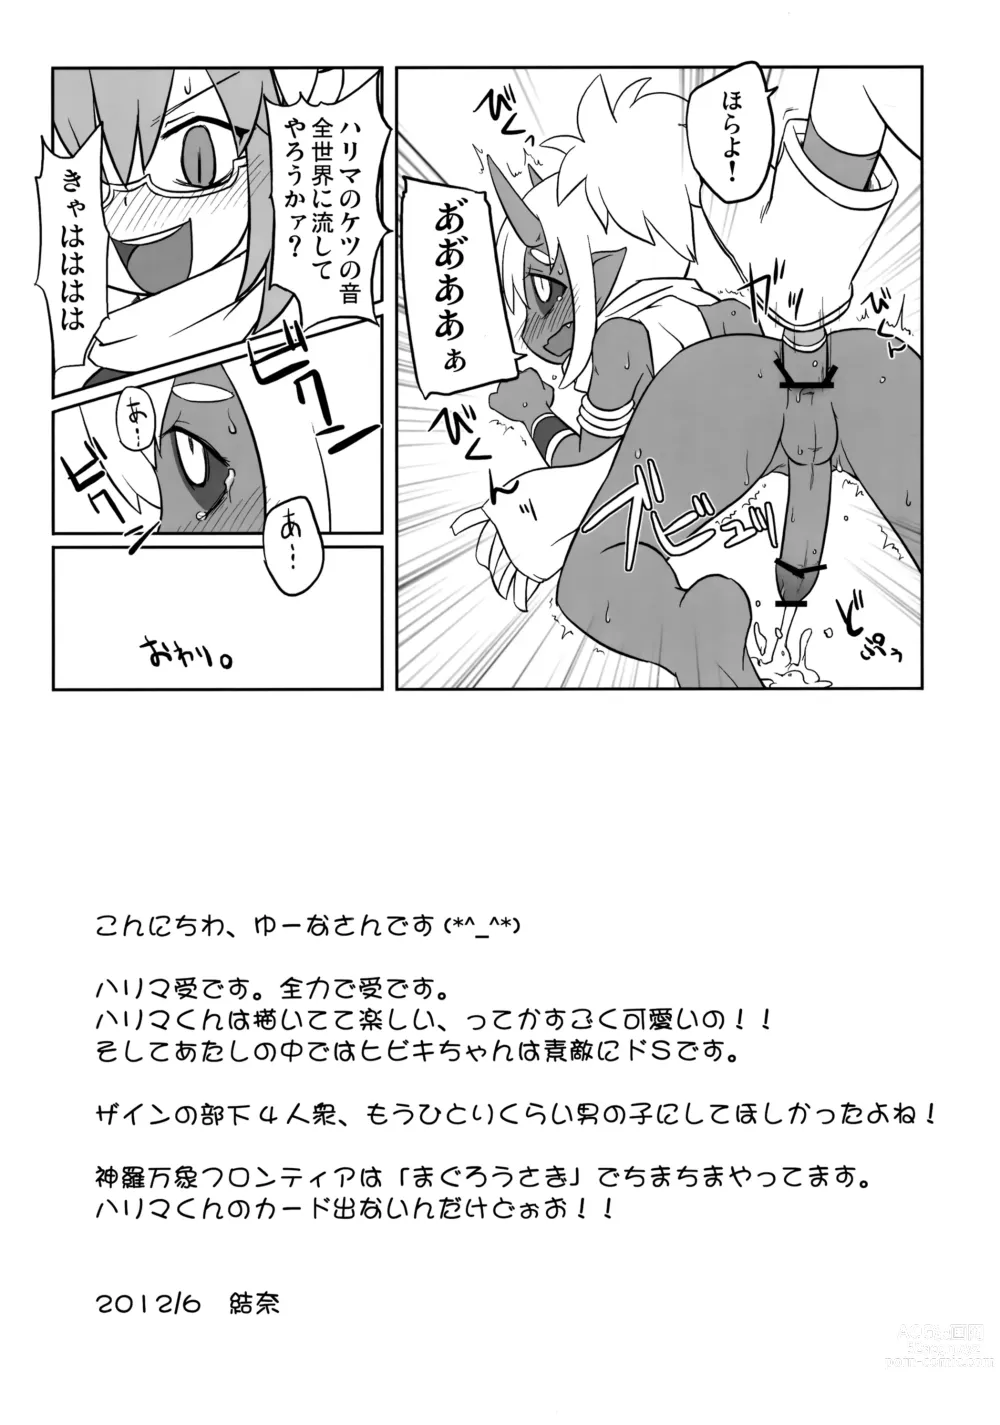 Page 16 of doujinshi Shin-ra bon!!